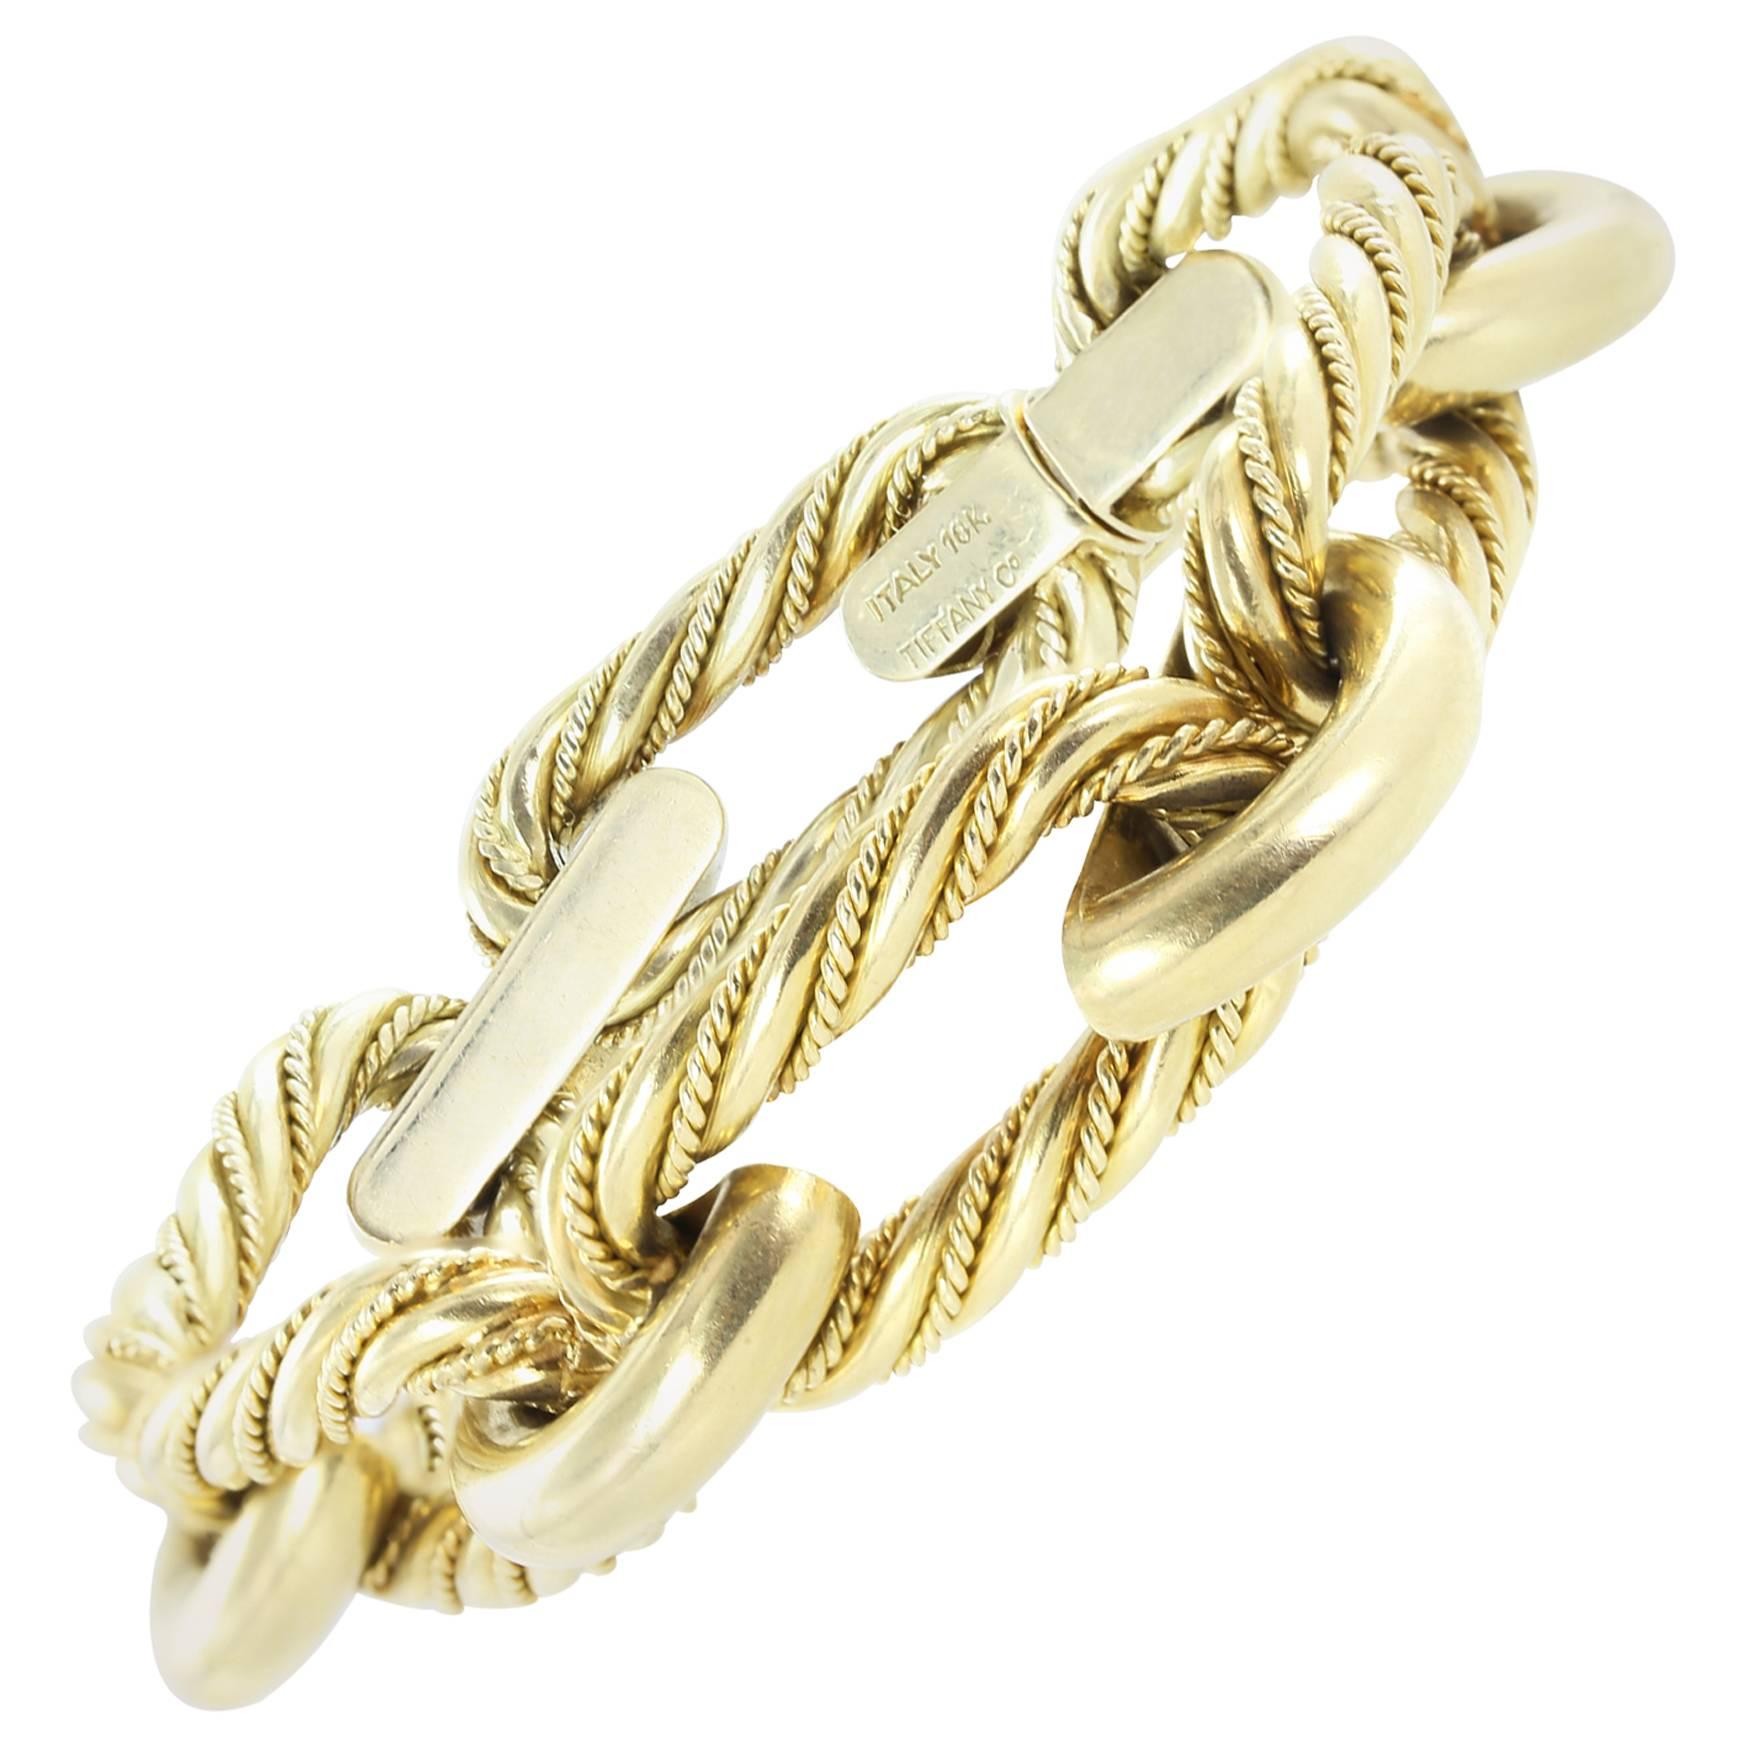  Tiffany & Co. Gold Link Bracelet